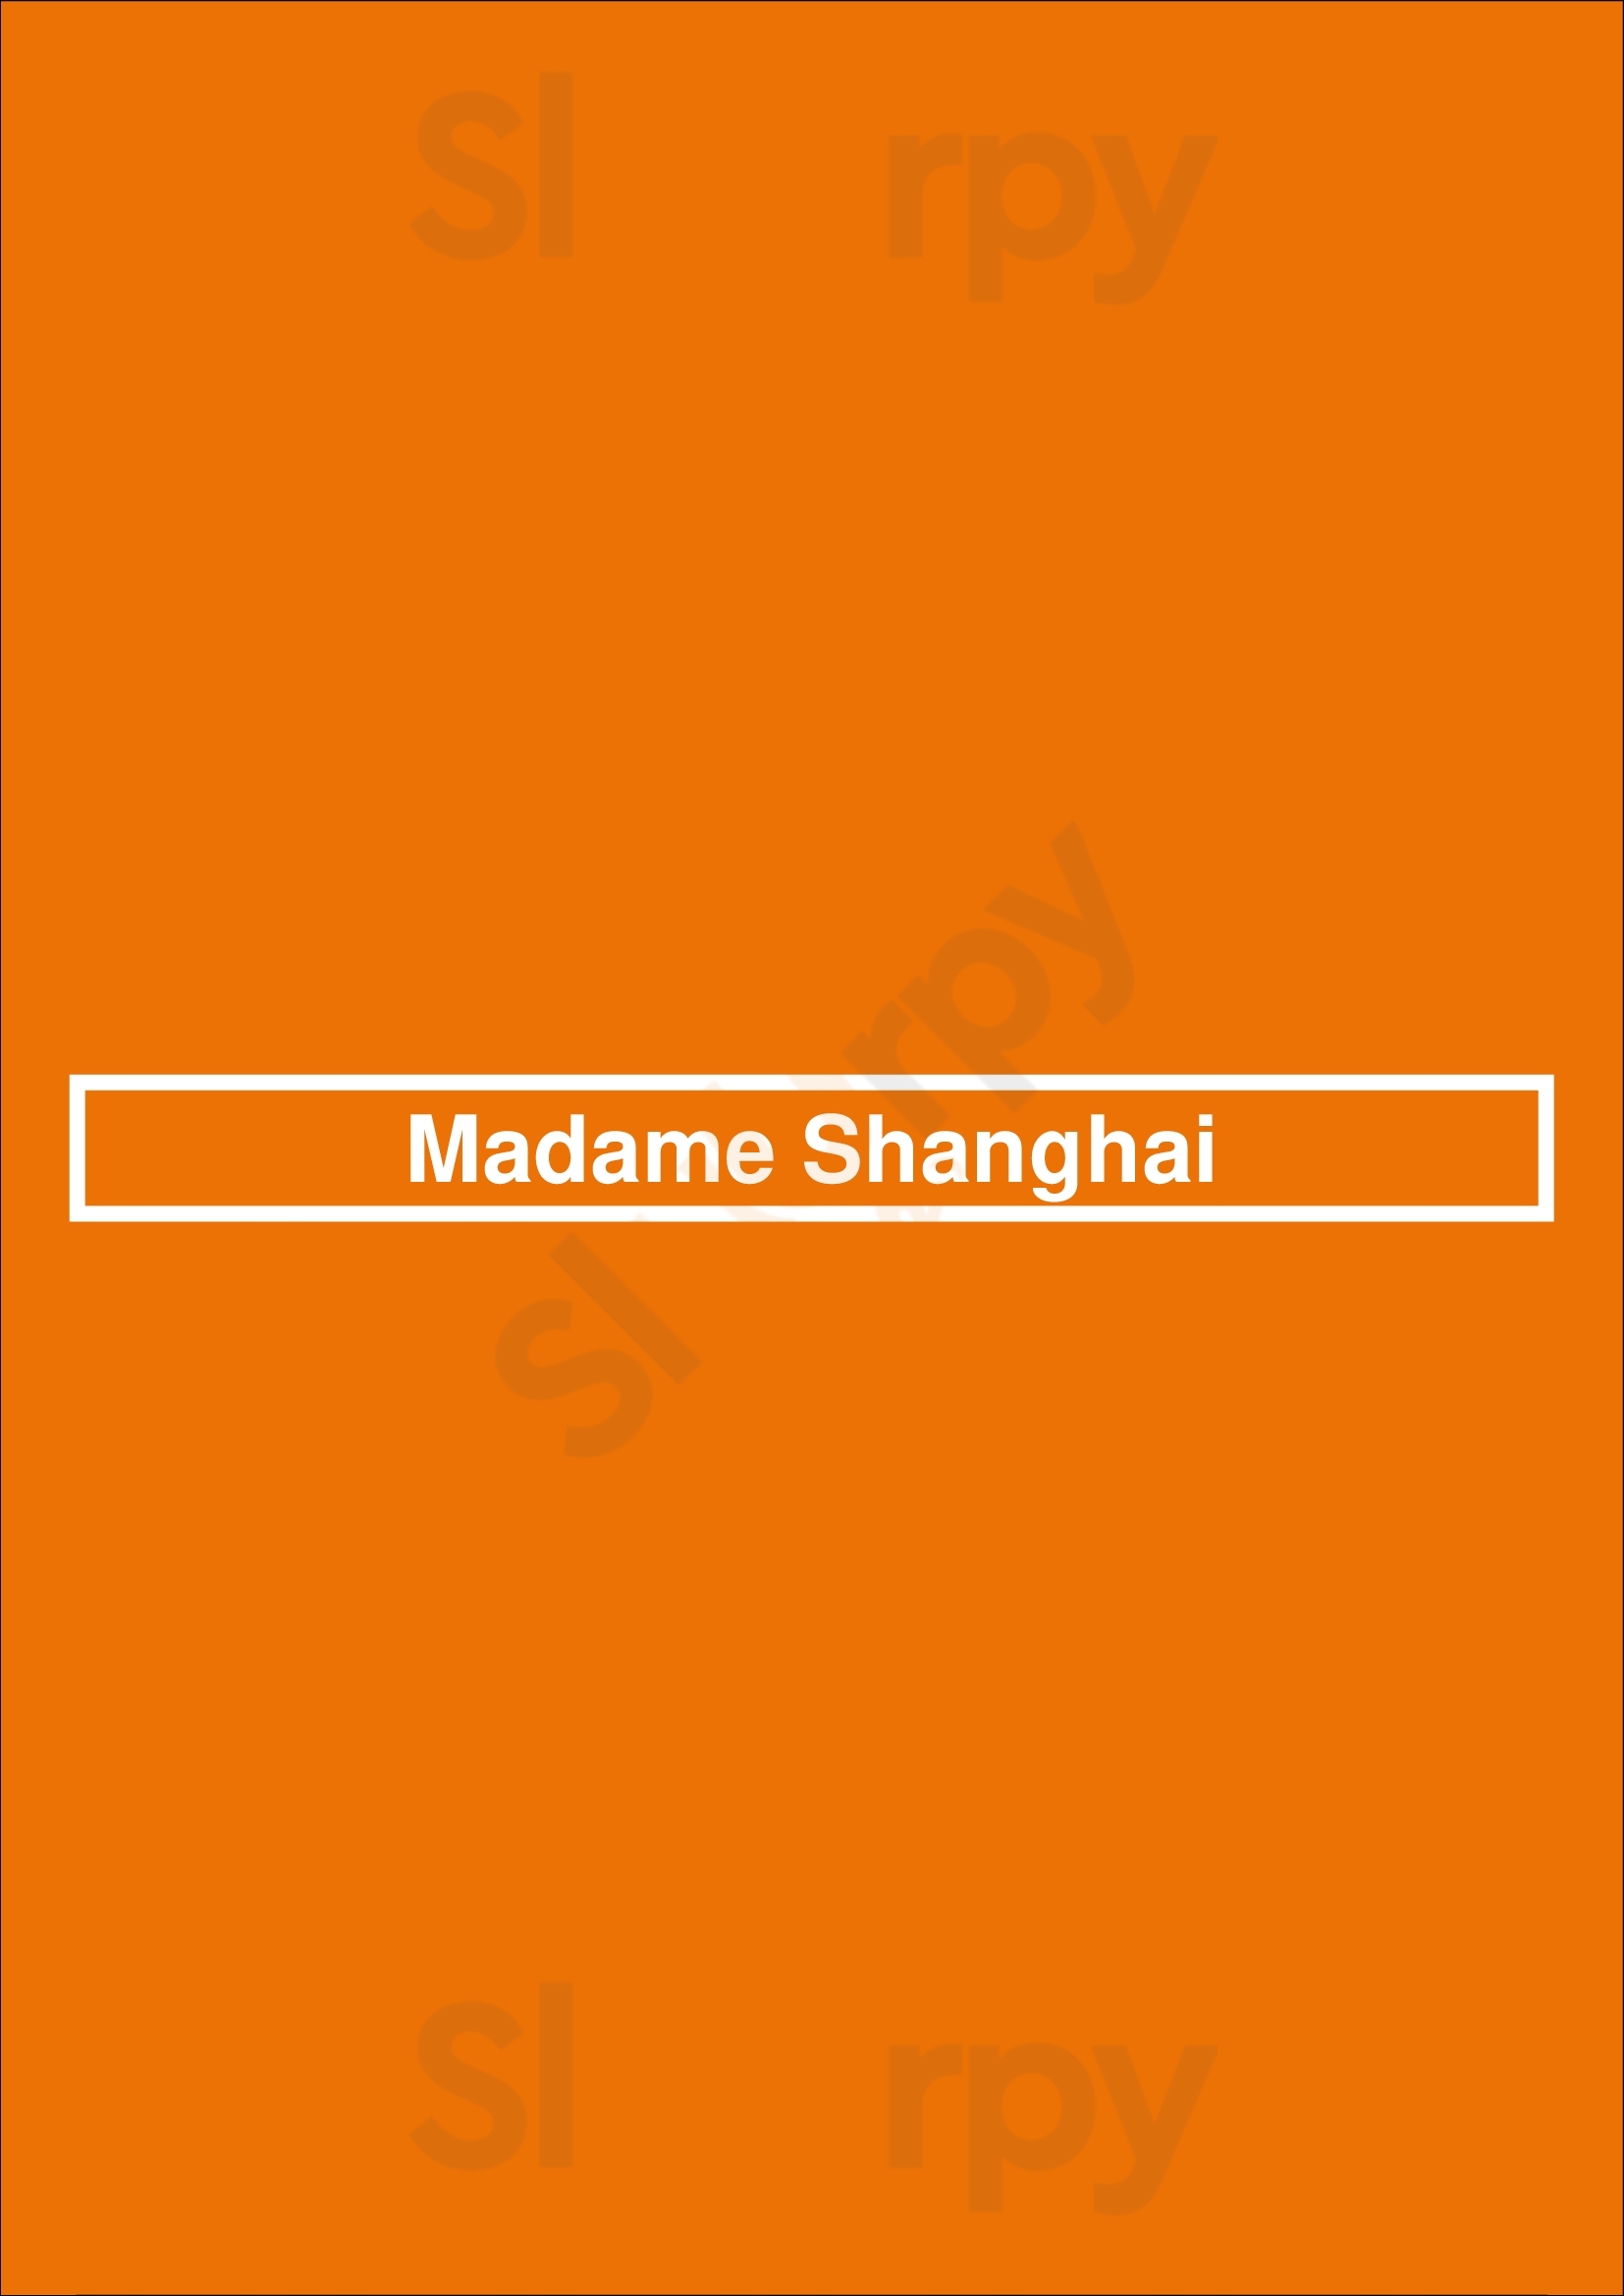 Madame Shanghai Sydney Menu - 1